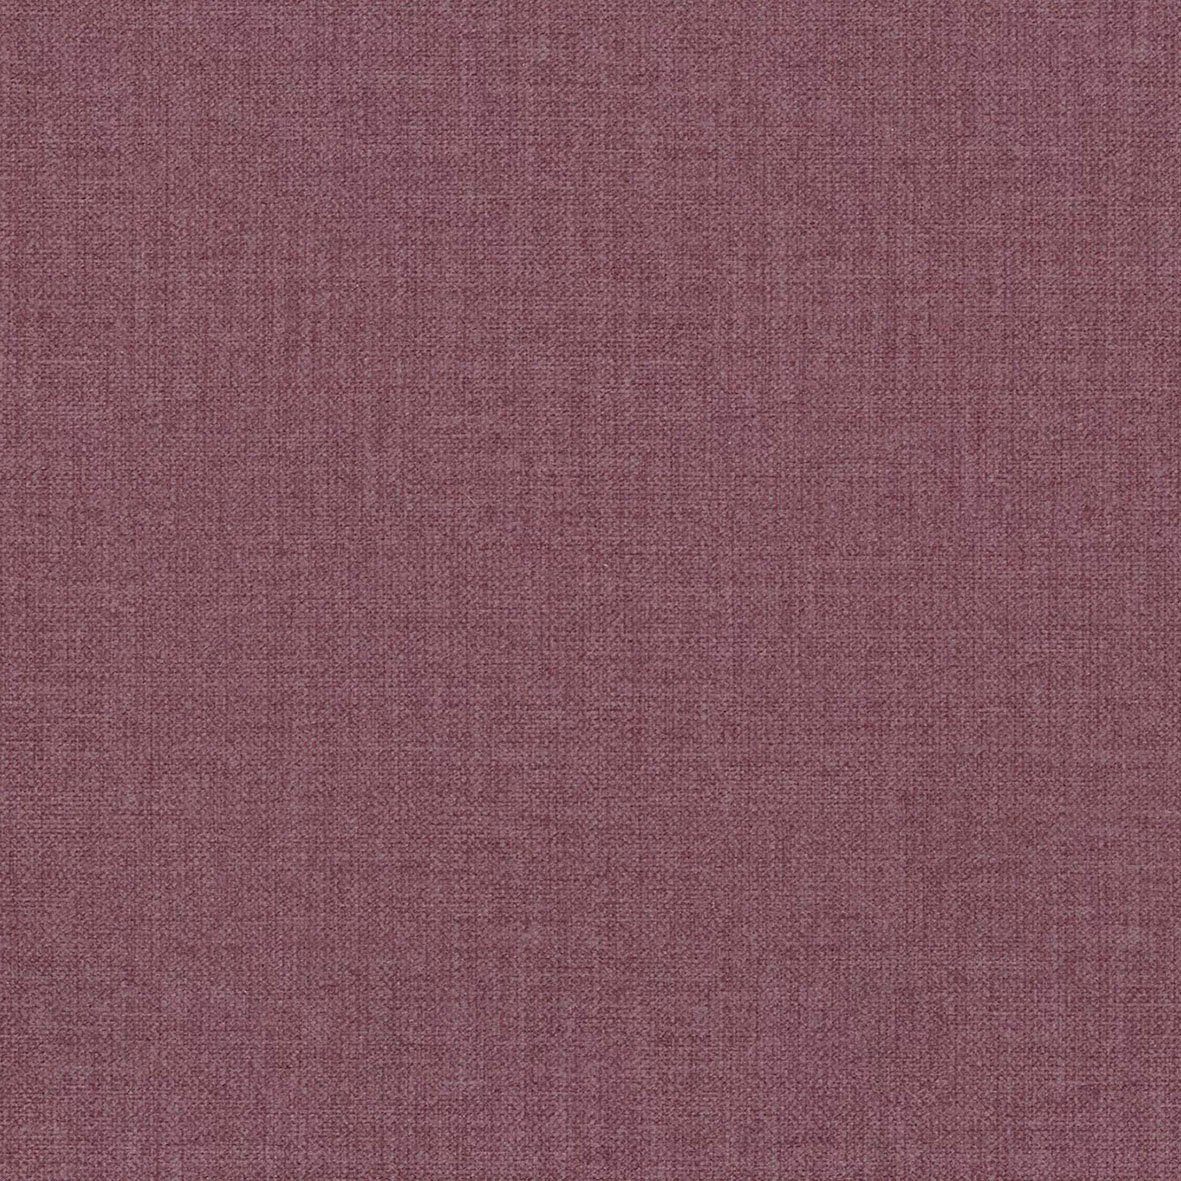 bequeme Farben Tilques, affaire Home violet viele Sitzgelegenheiten, pink verfügbar Ecksofa